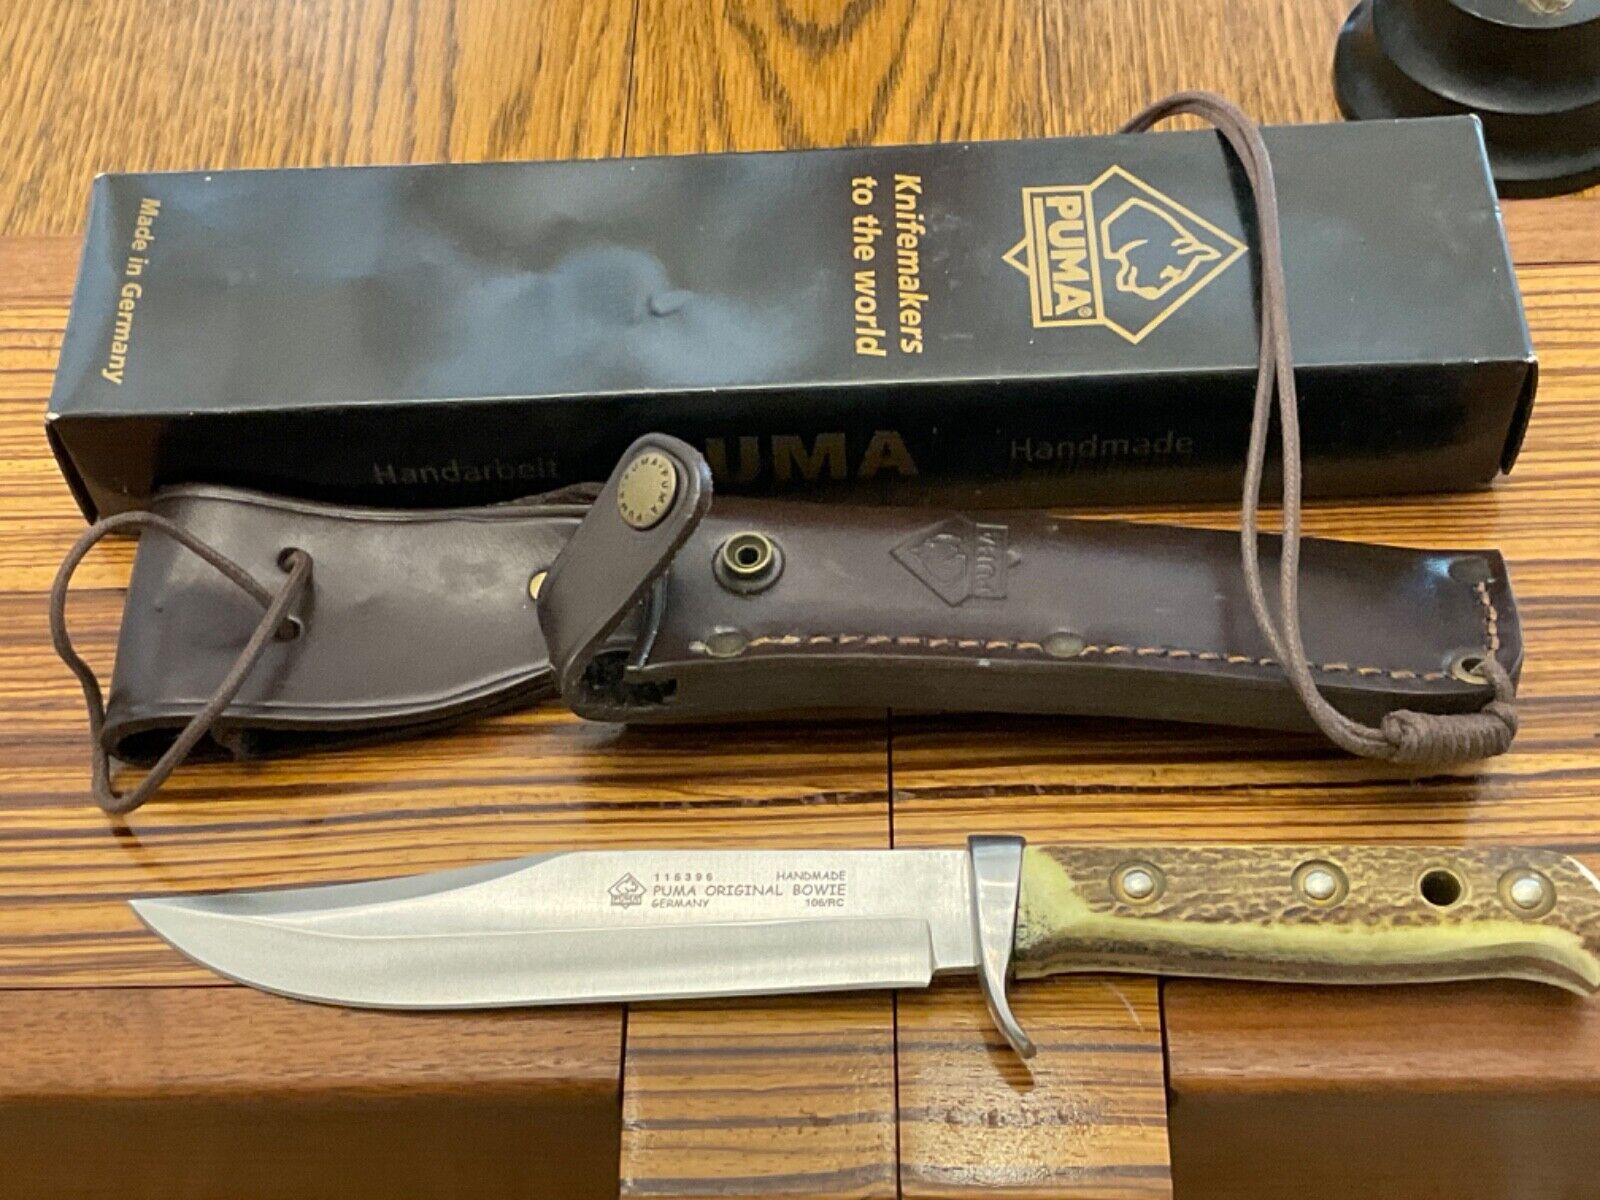 Puma Bowie knife model# 11 6396 vintage hunting